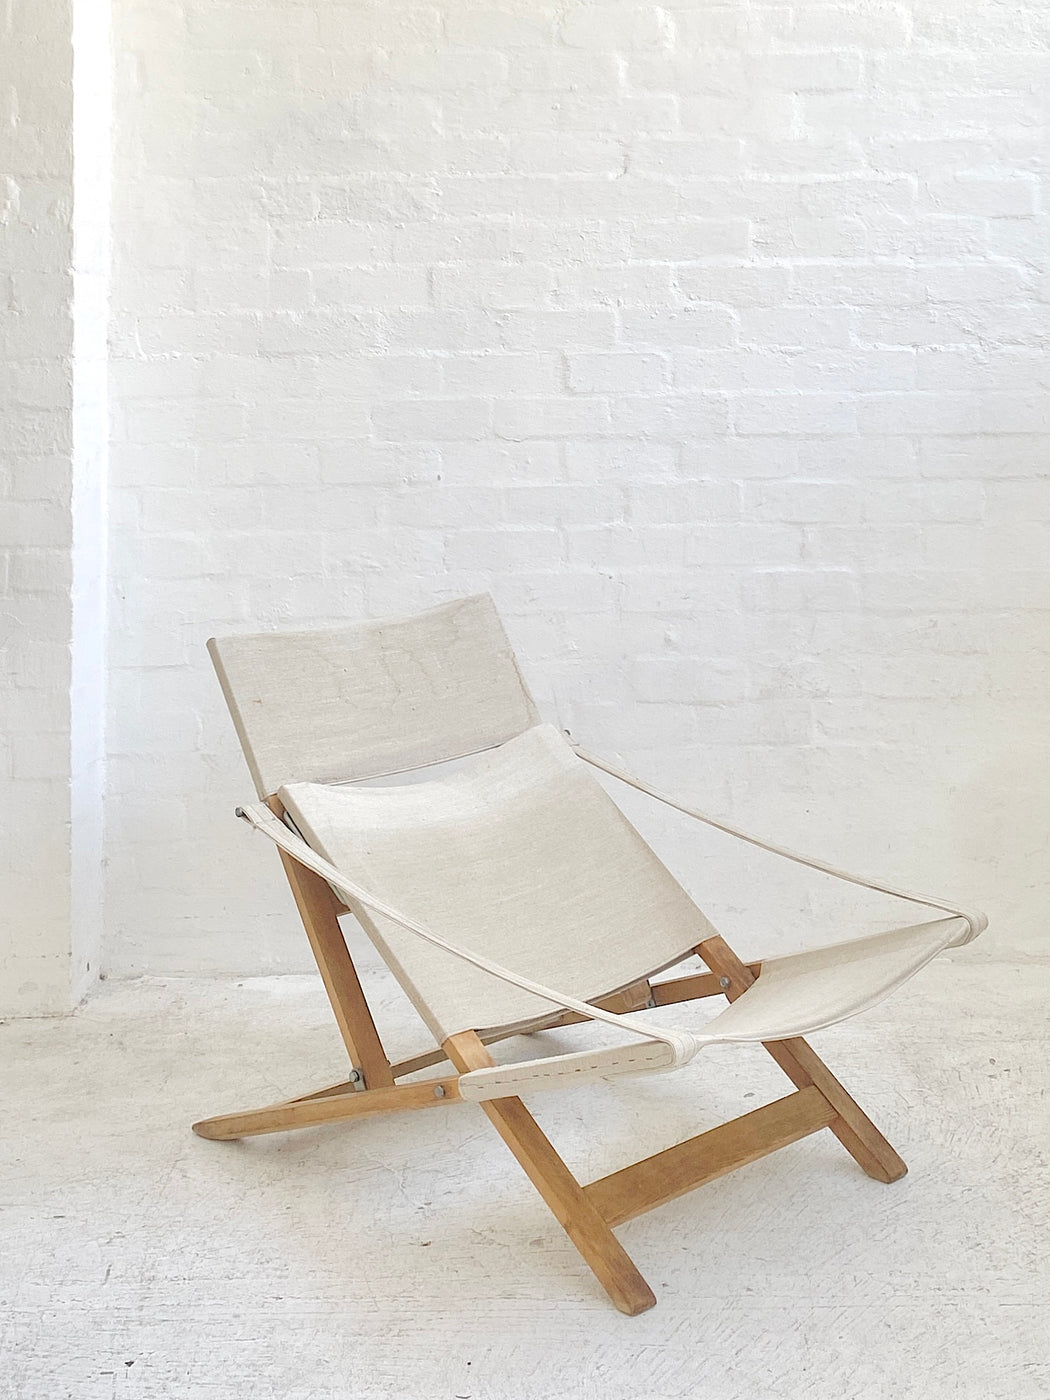 Lauge Vestergaard 'Model 139' Chair